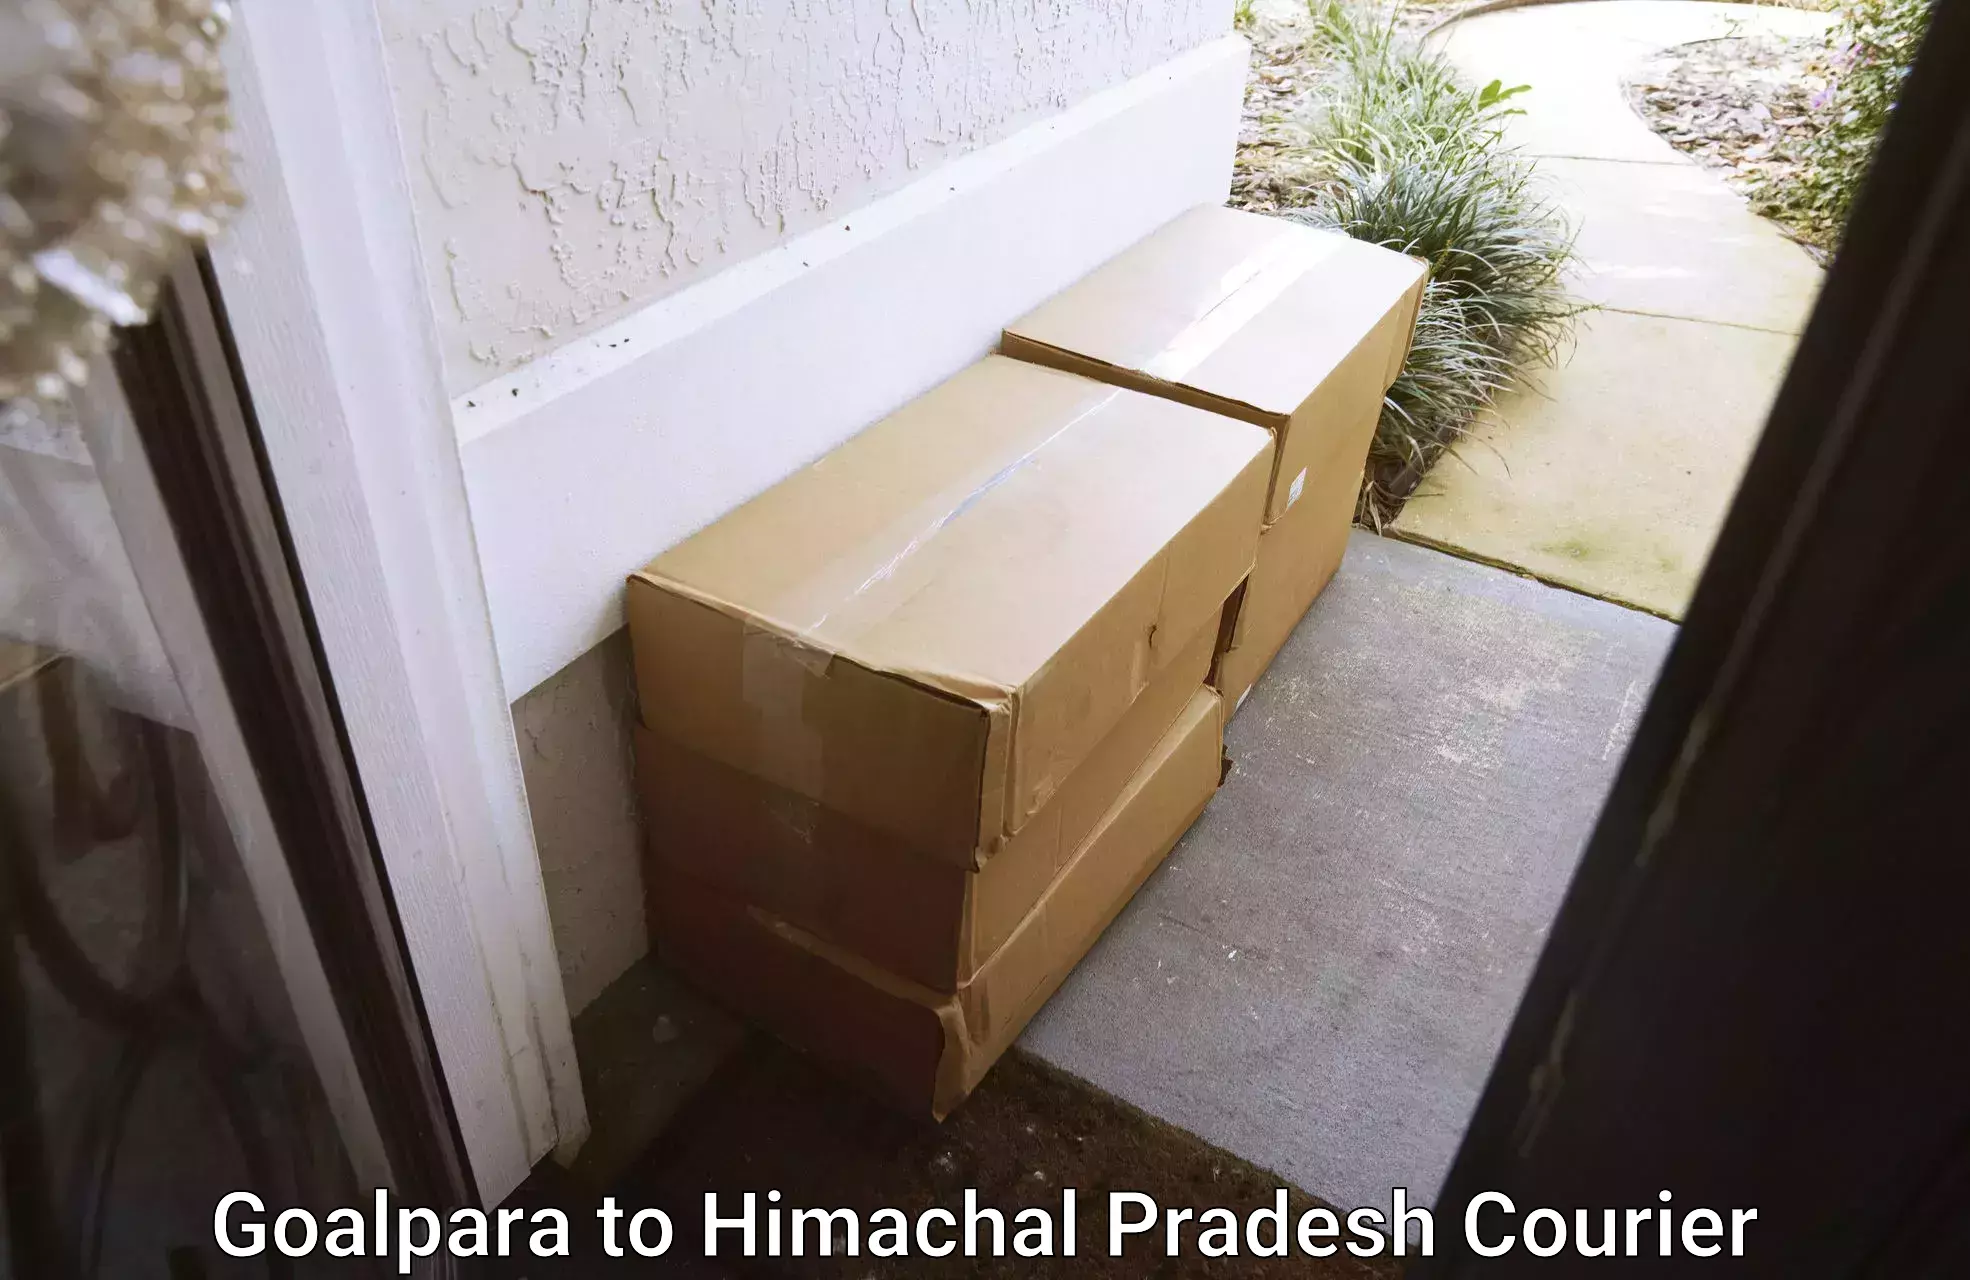 Urgent courier needs Goalpara to Dheera